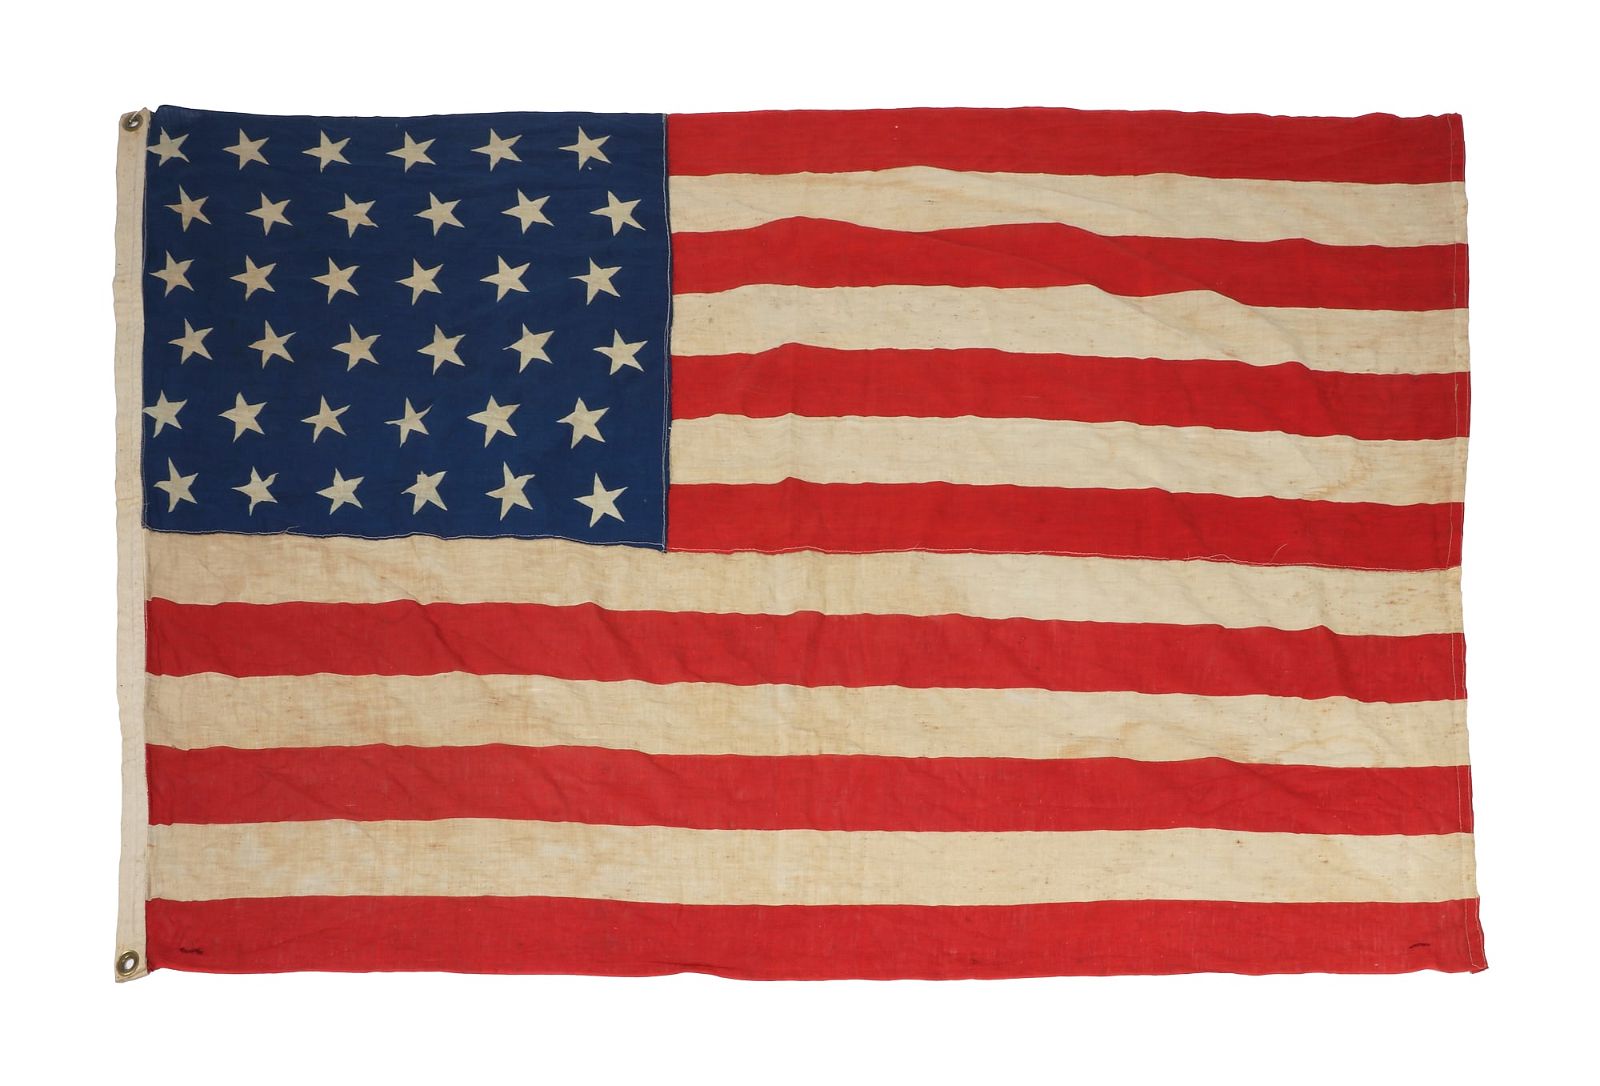 A 36 STAR AMERICAN FLAG COMMEMORATING 2fb403a